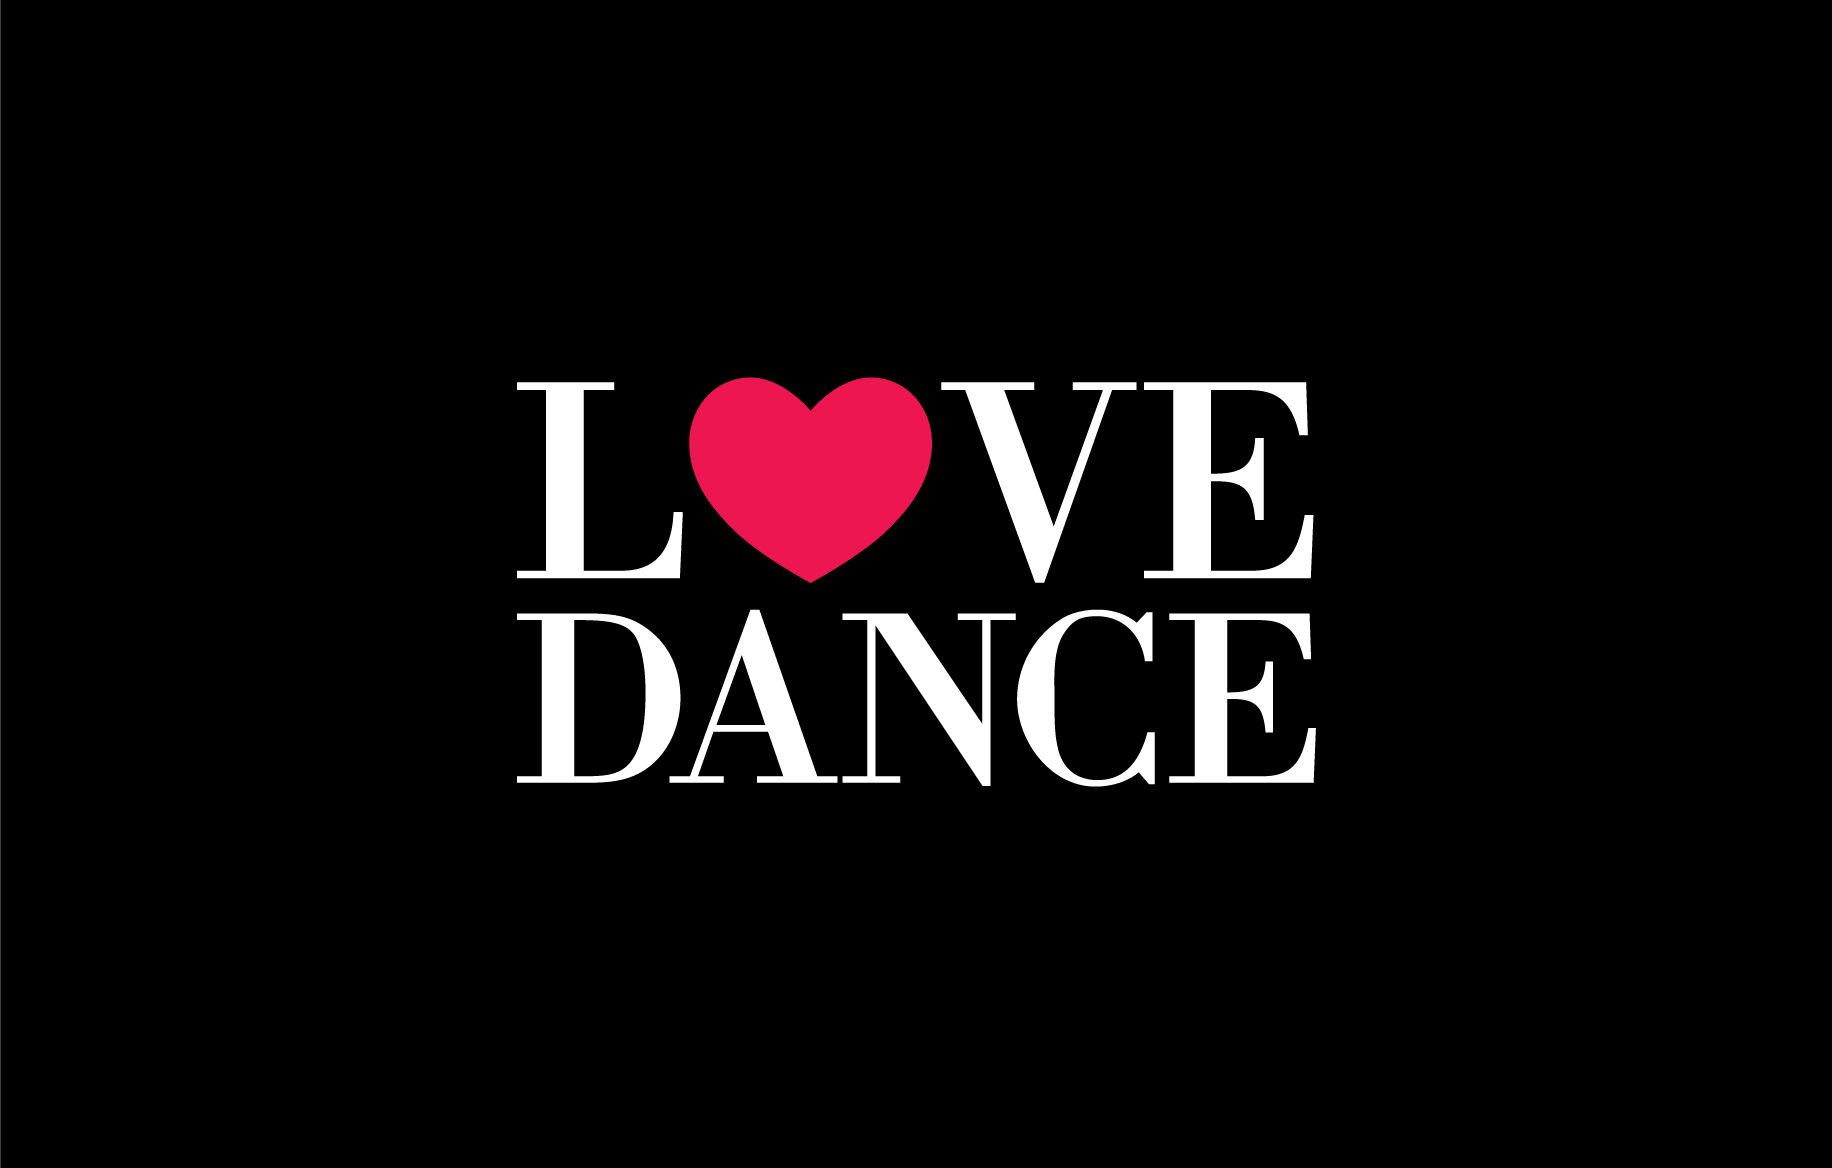 Love dance music. Love Dance. Живи танцуя. Картинка i Love Dance. Love Beat танцы.